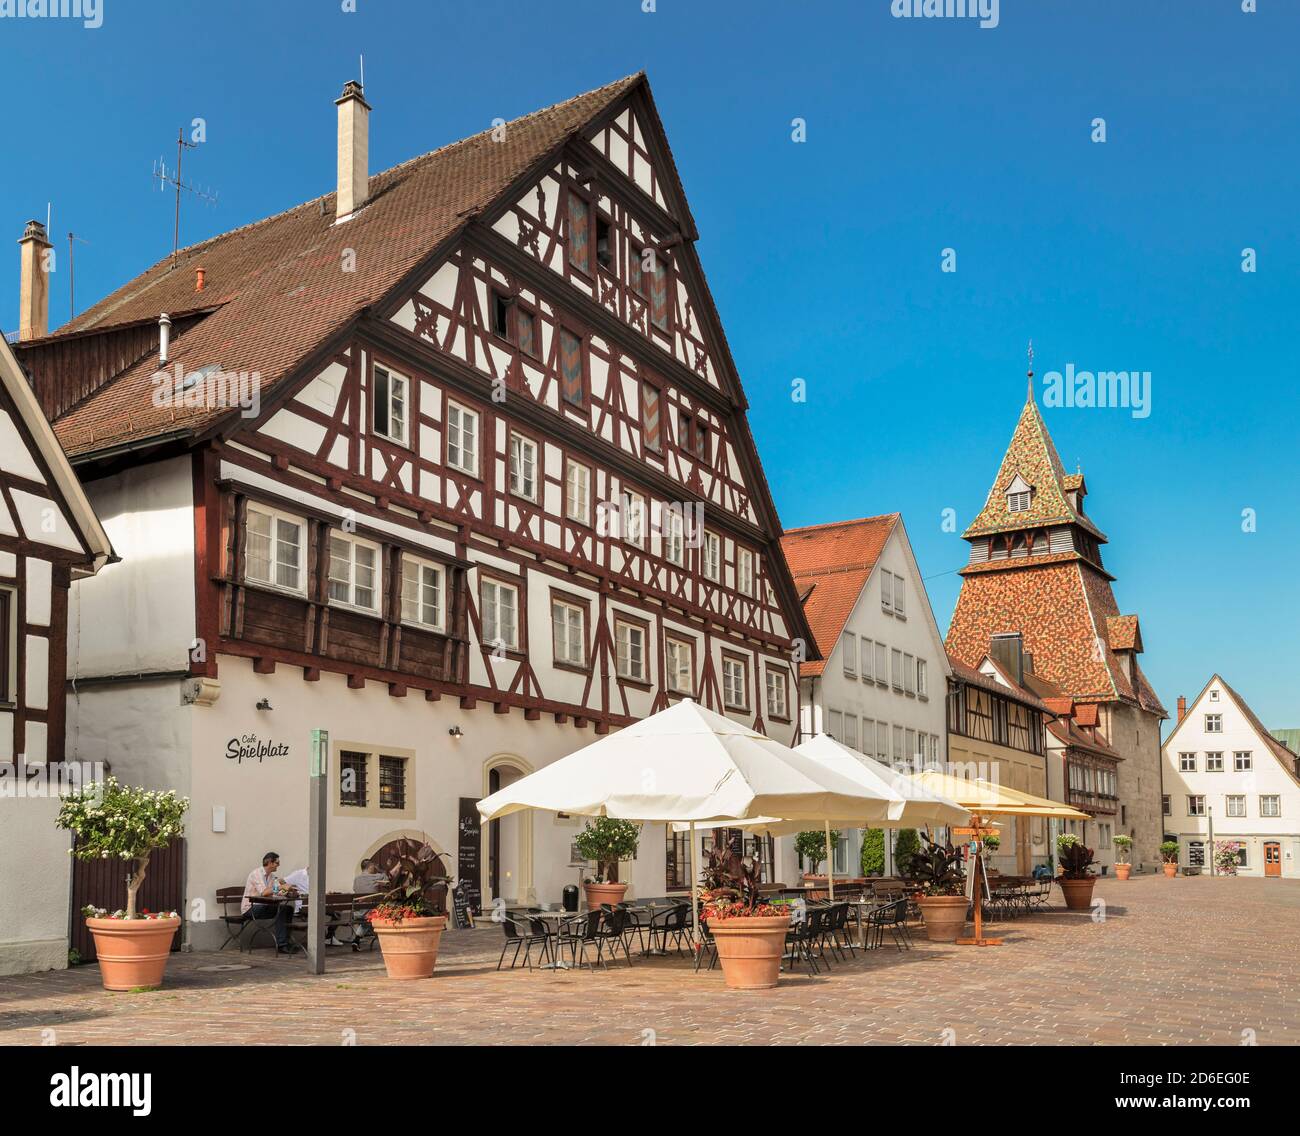 Heilig kreuz munster hi-res stock photography and images - Alamy